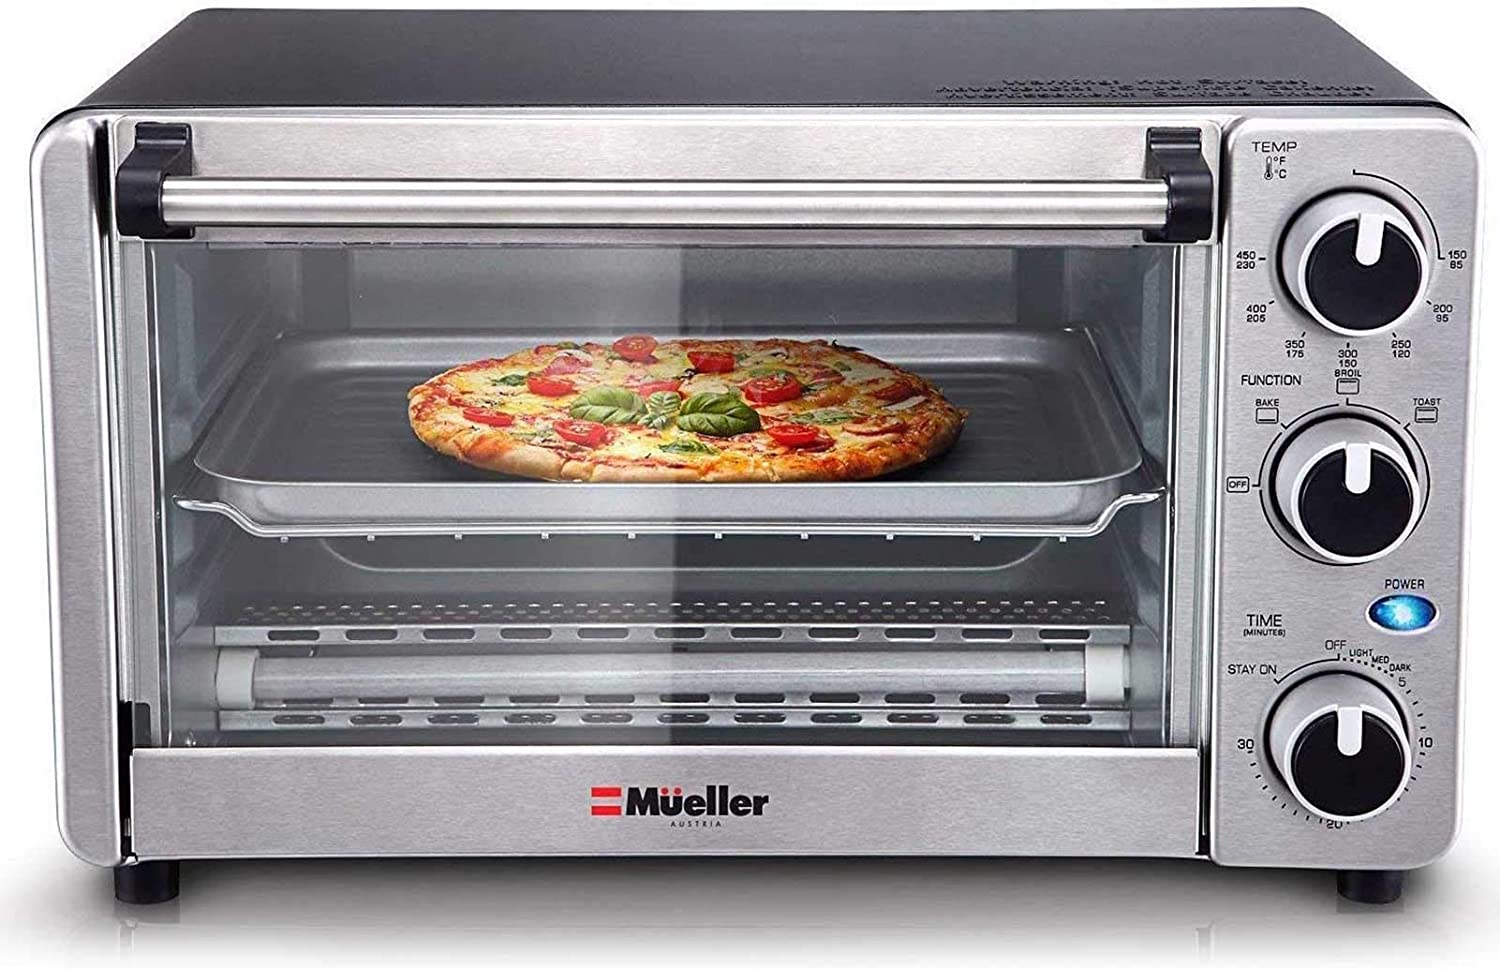 https://www.dontwasteyourmoney.com/wp-content/uploads/2020/07/mueller-austria-multi-function-toaster-convection-oven.jpg